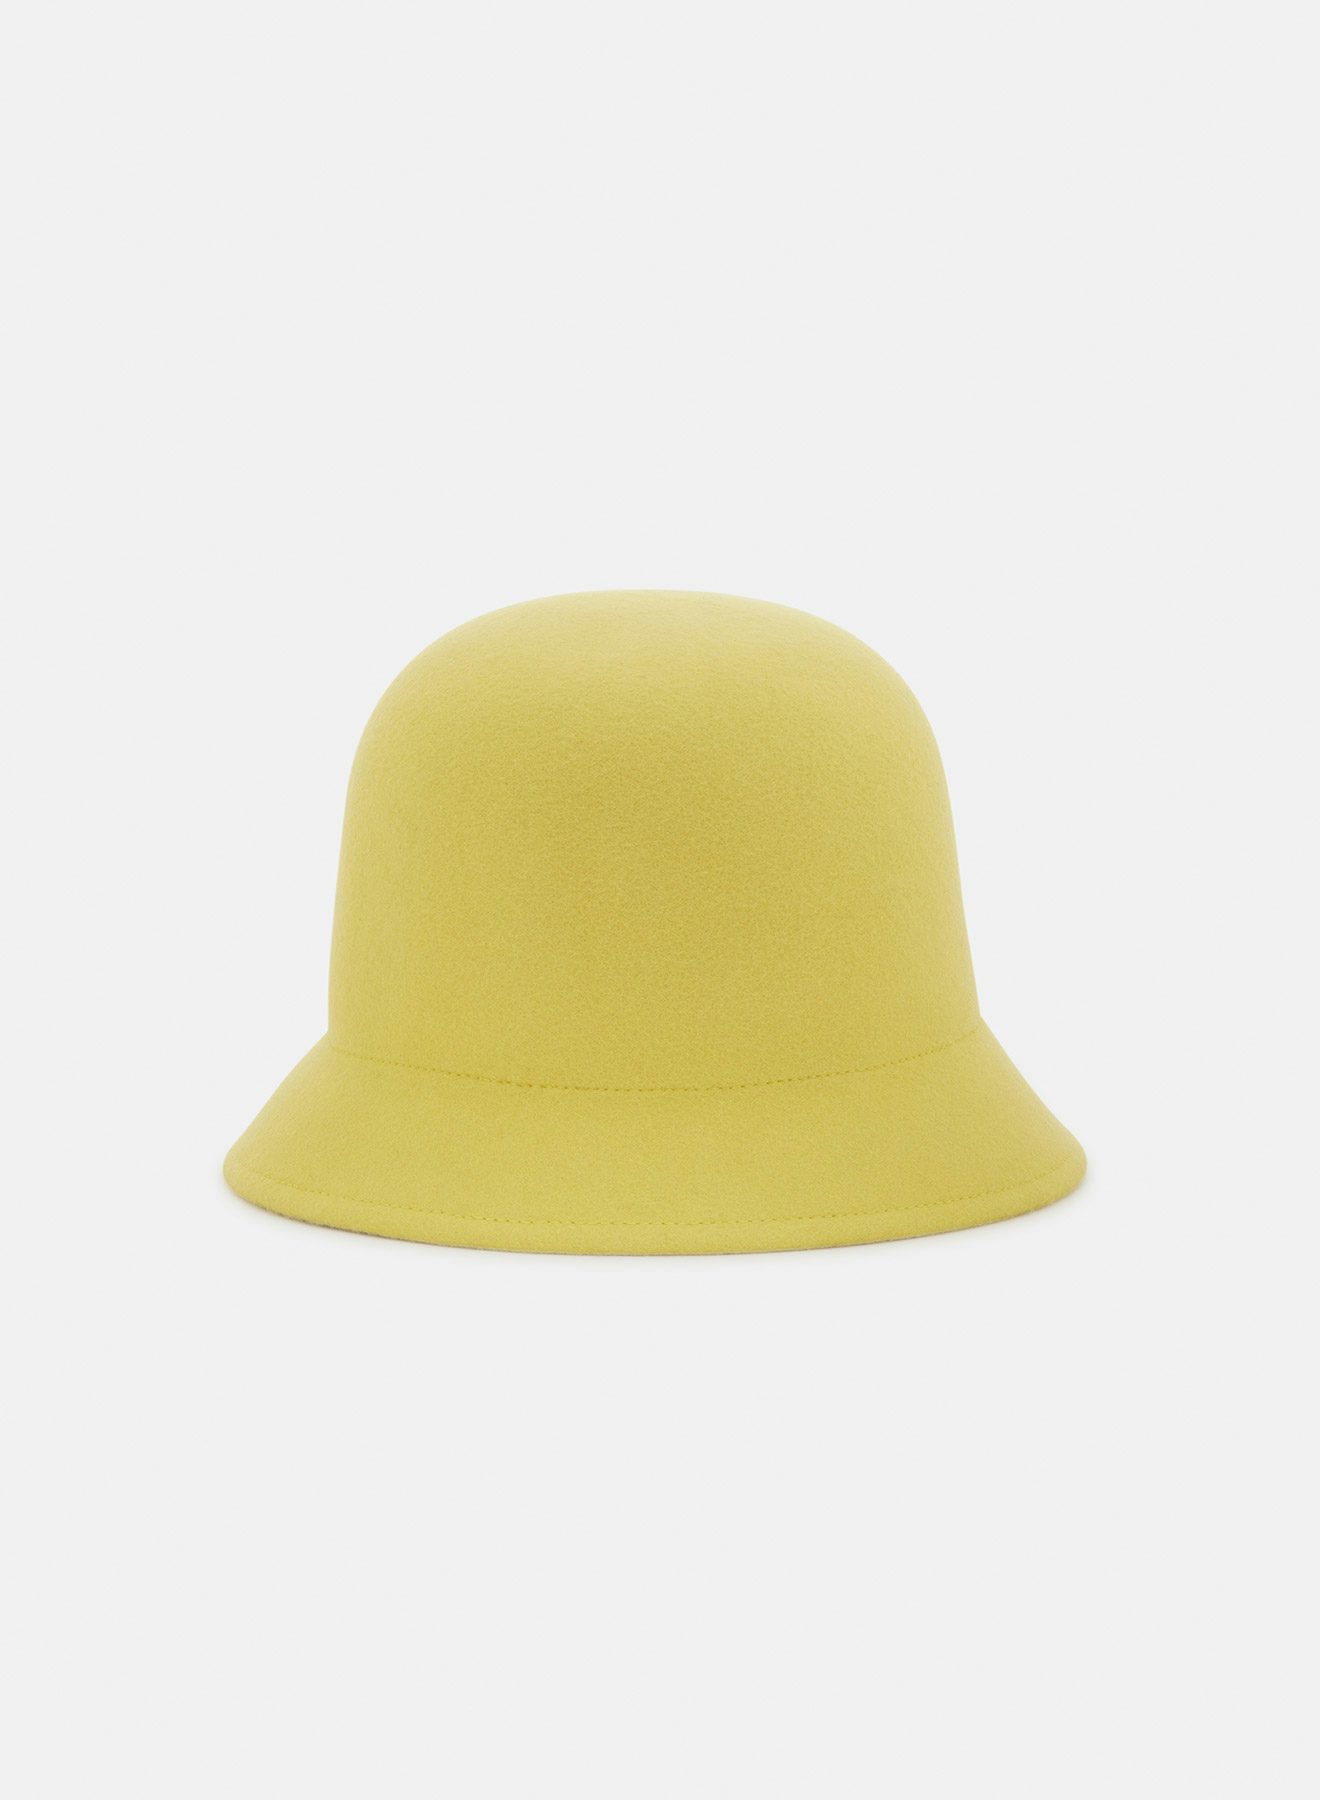 Felted wool hat yellow - Nina Ricci